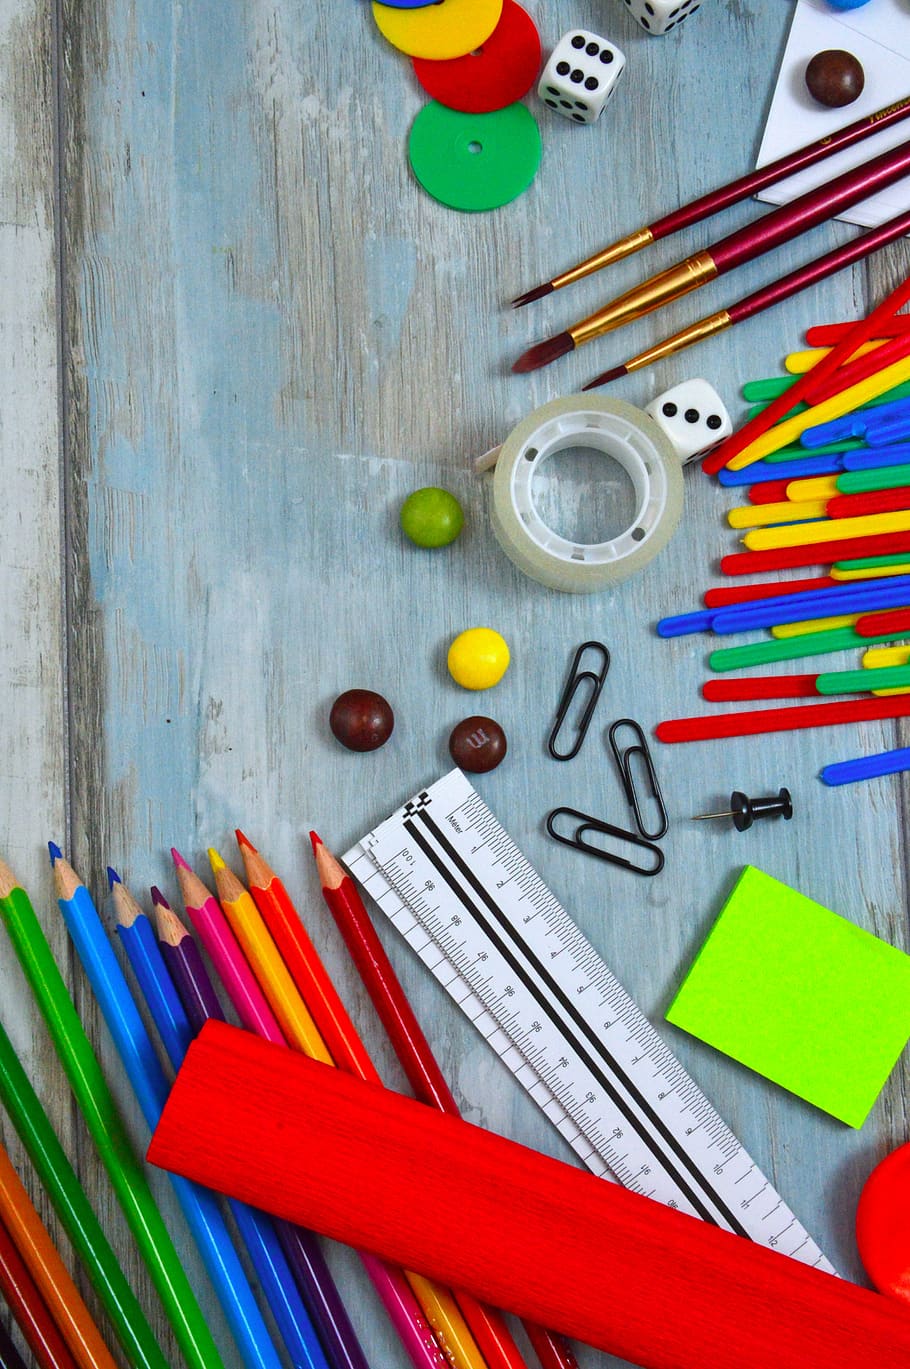 color, school supplies, child, school, school starts, childhood, education, learning, pencil, pencils